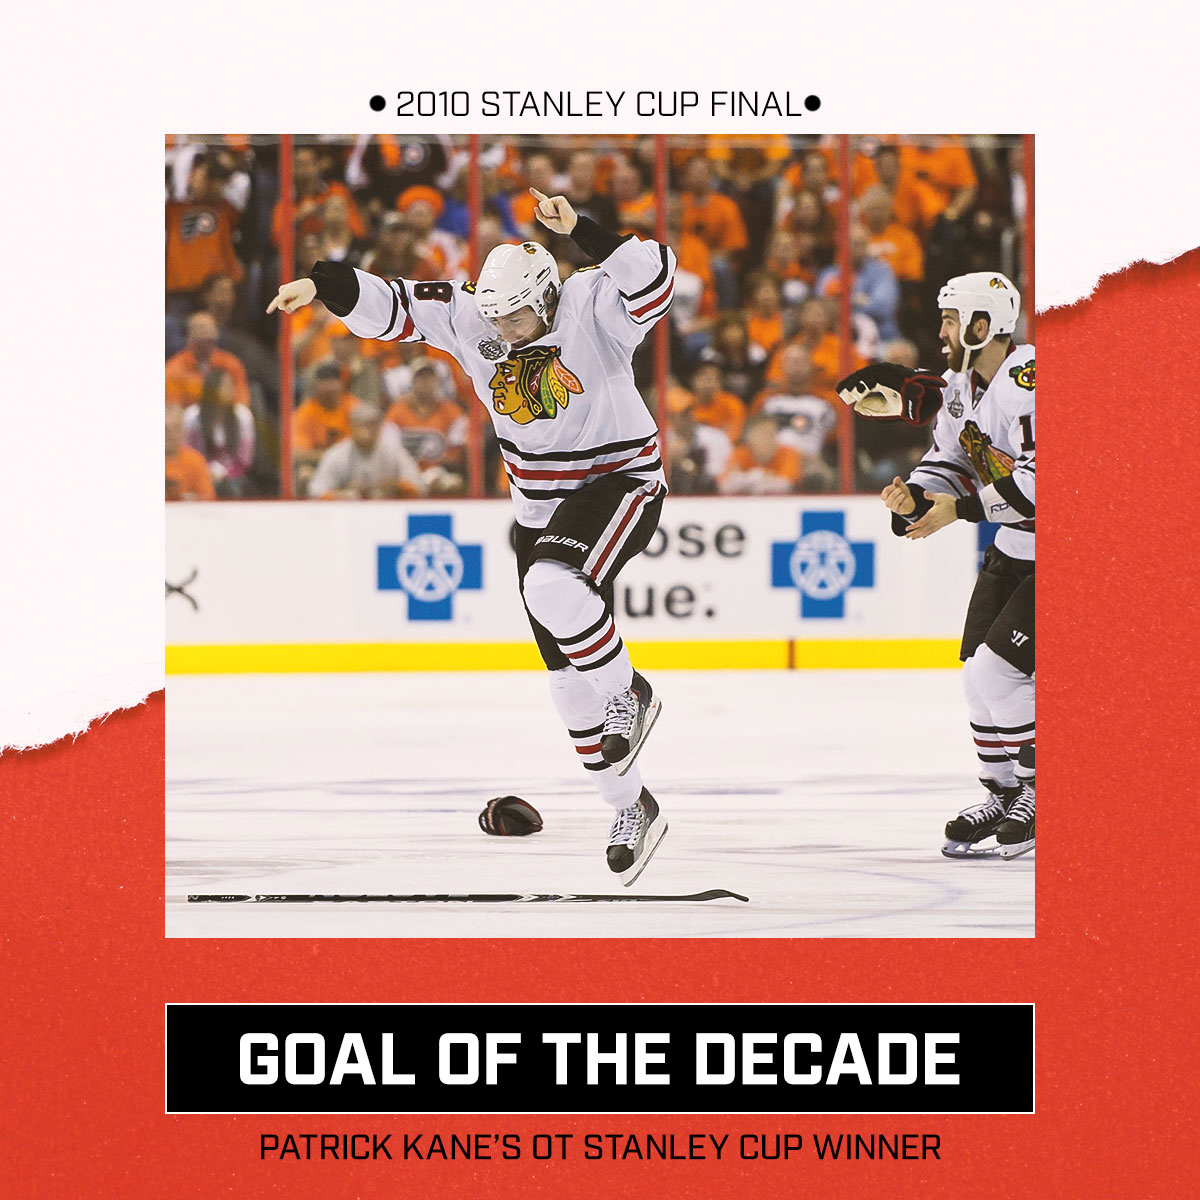 Patrick Kane's 2010 Stanley Cup Winning Goal